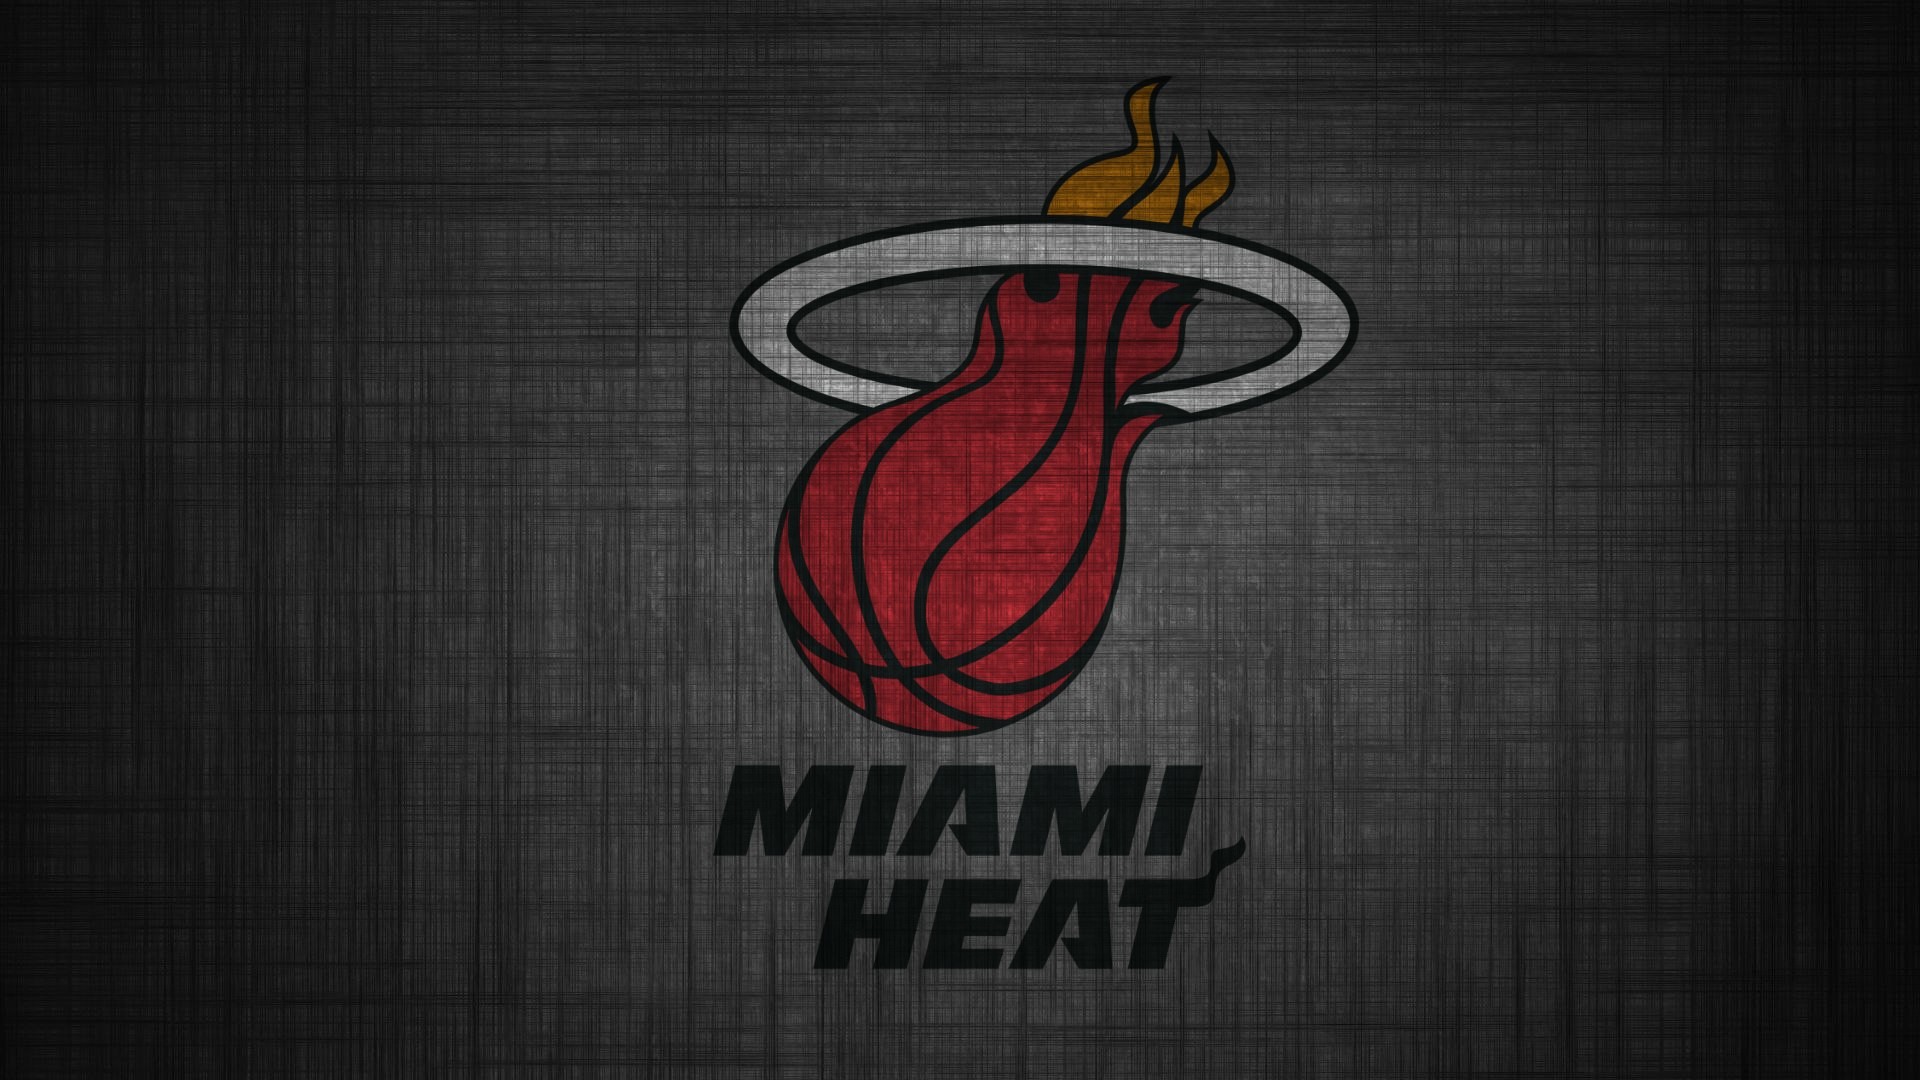 Miami heat wallpaper for mac